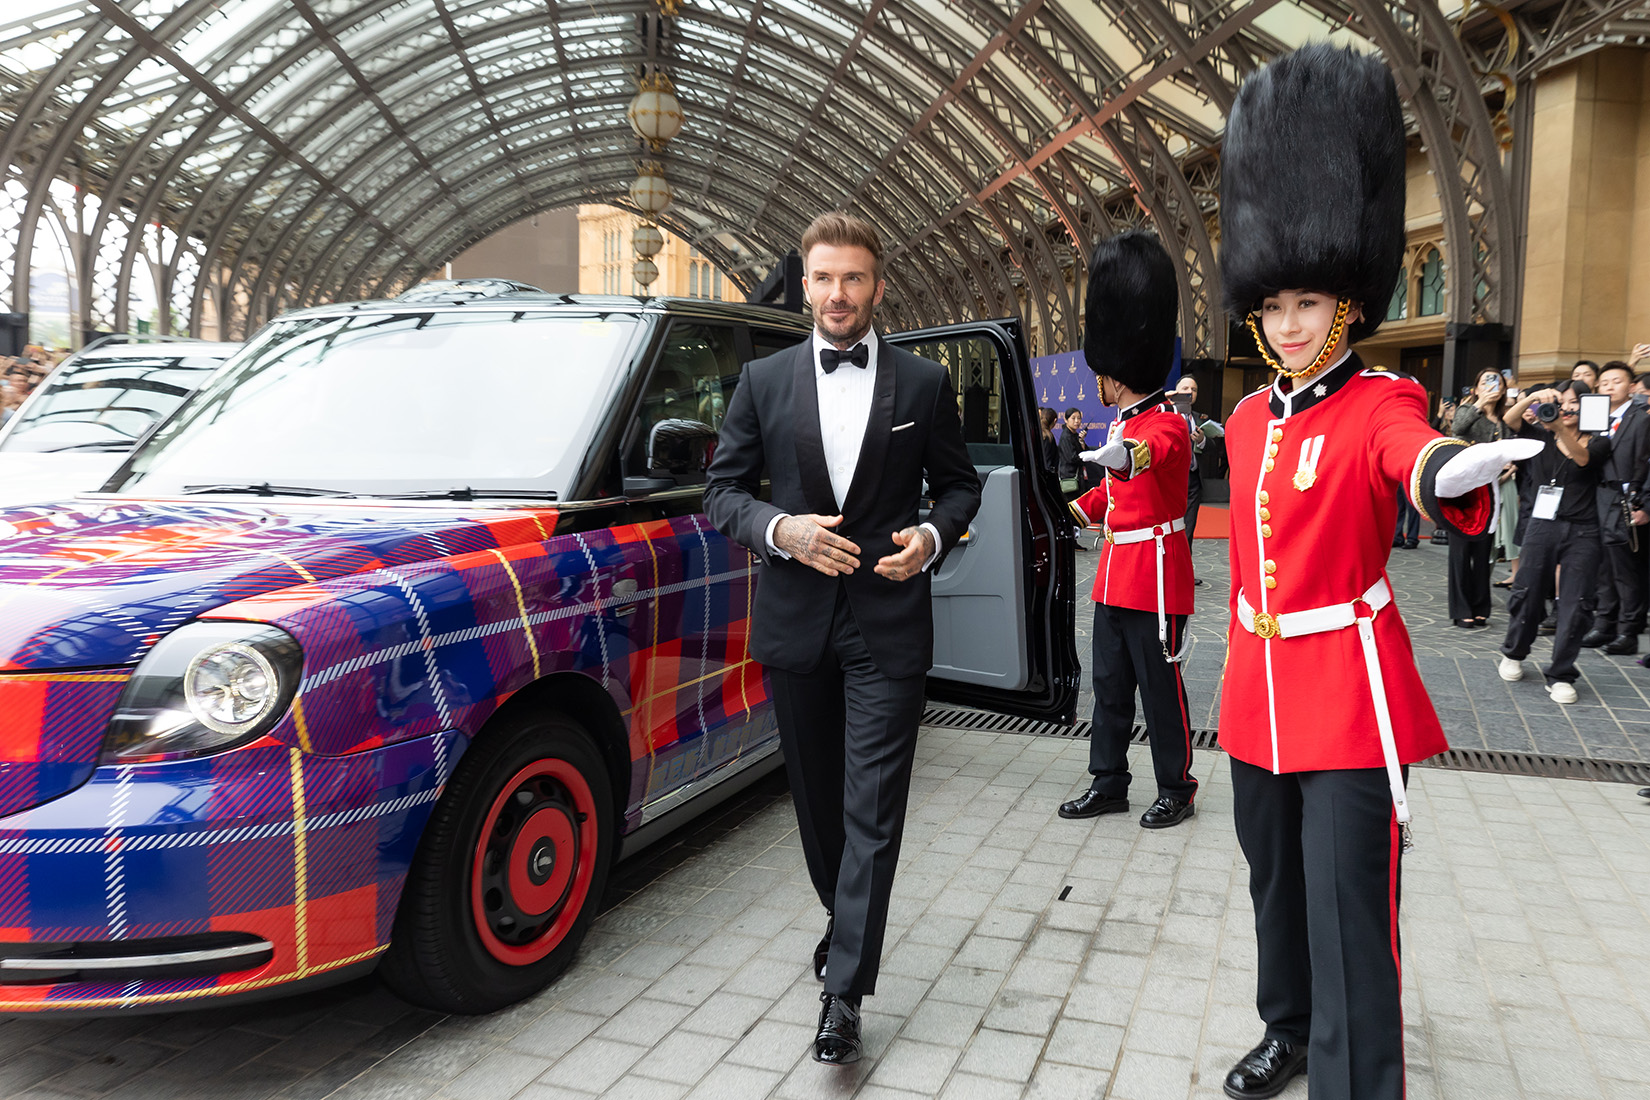 UK soccer icon and Sands global ambassador David Beckham stops at the red carpet during The Londoner Macao Grand Celebration event at The Londoner Arena Thursday.